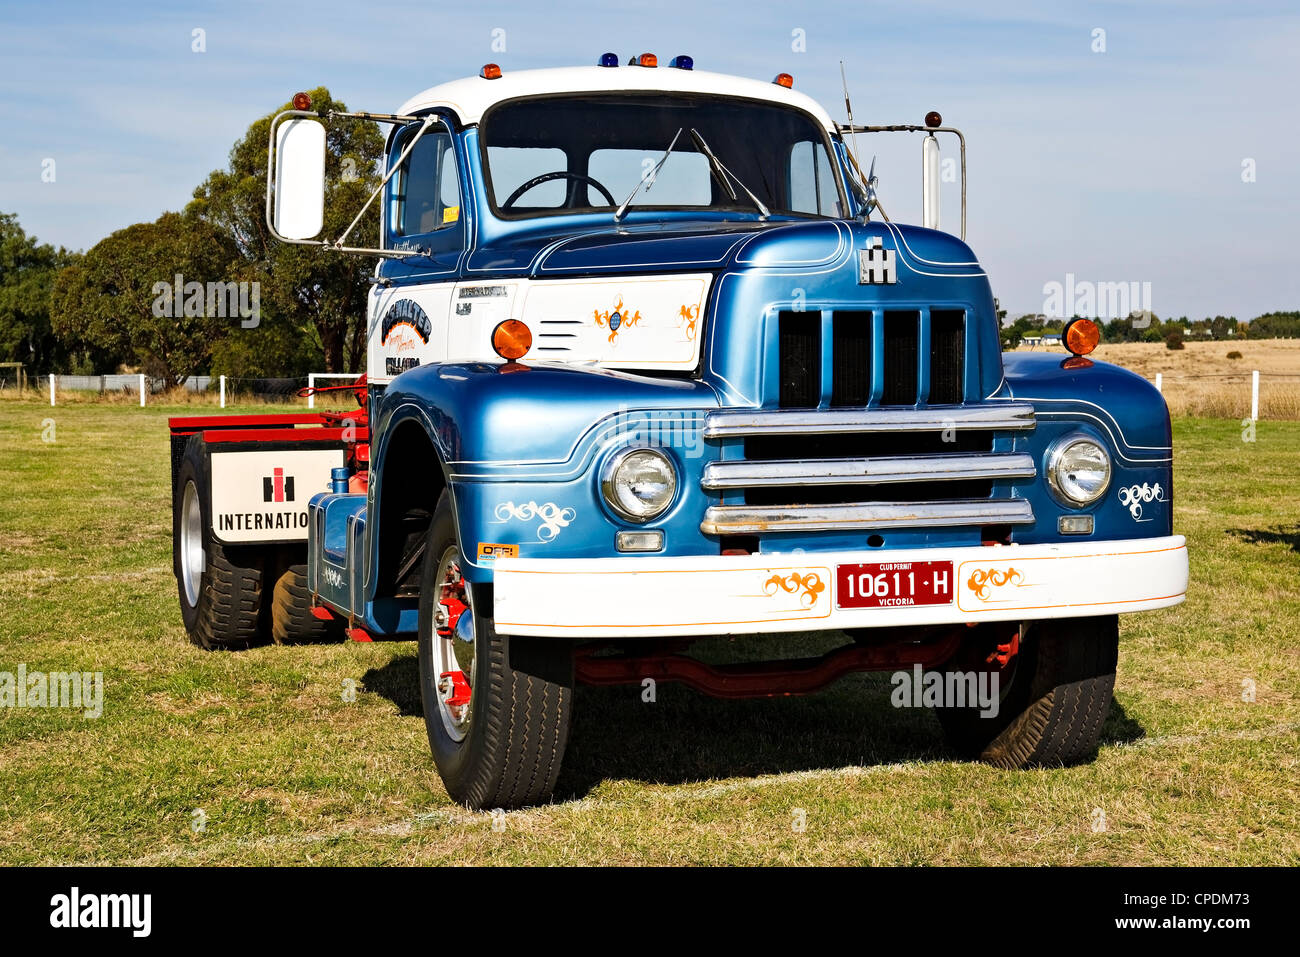 Clunes Australia / This R 195 series International truck was on Stock Photo: 48244423 - Alamy